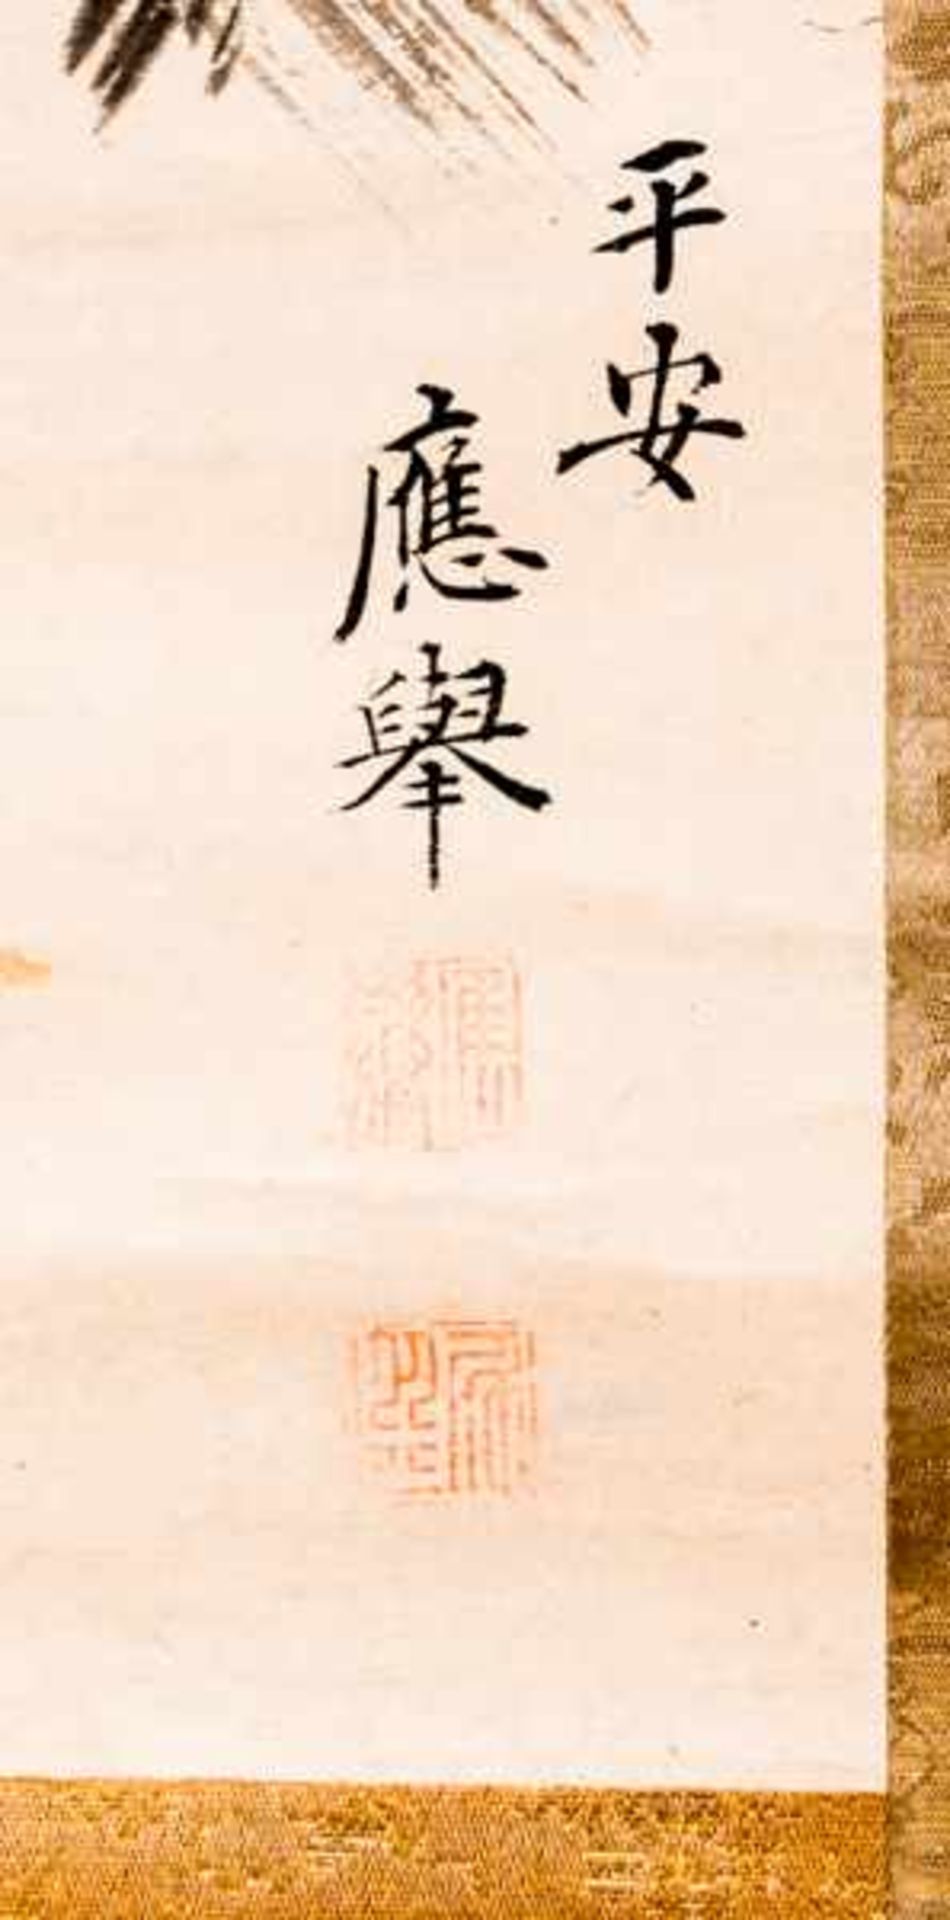 MARUYAMA OKYO (1735 – 1795): LUCKY GOD EBISU WITH CARP Ink and pain on silk. Japan, 18th cent.Ebisu, - Image 2 of 2